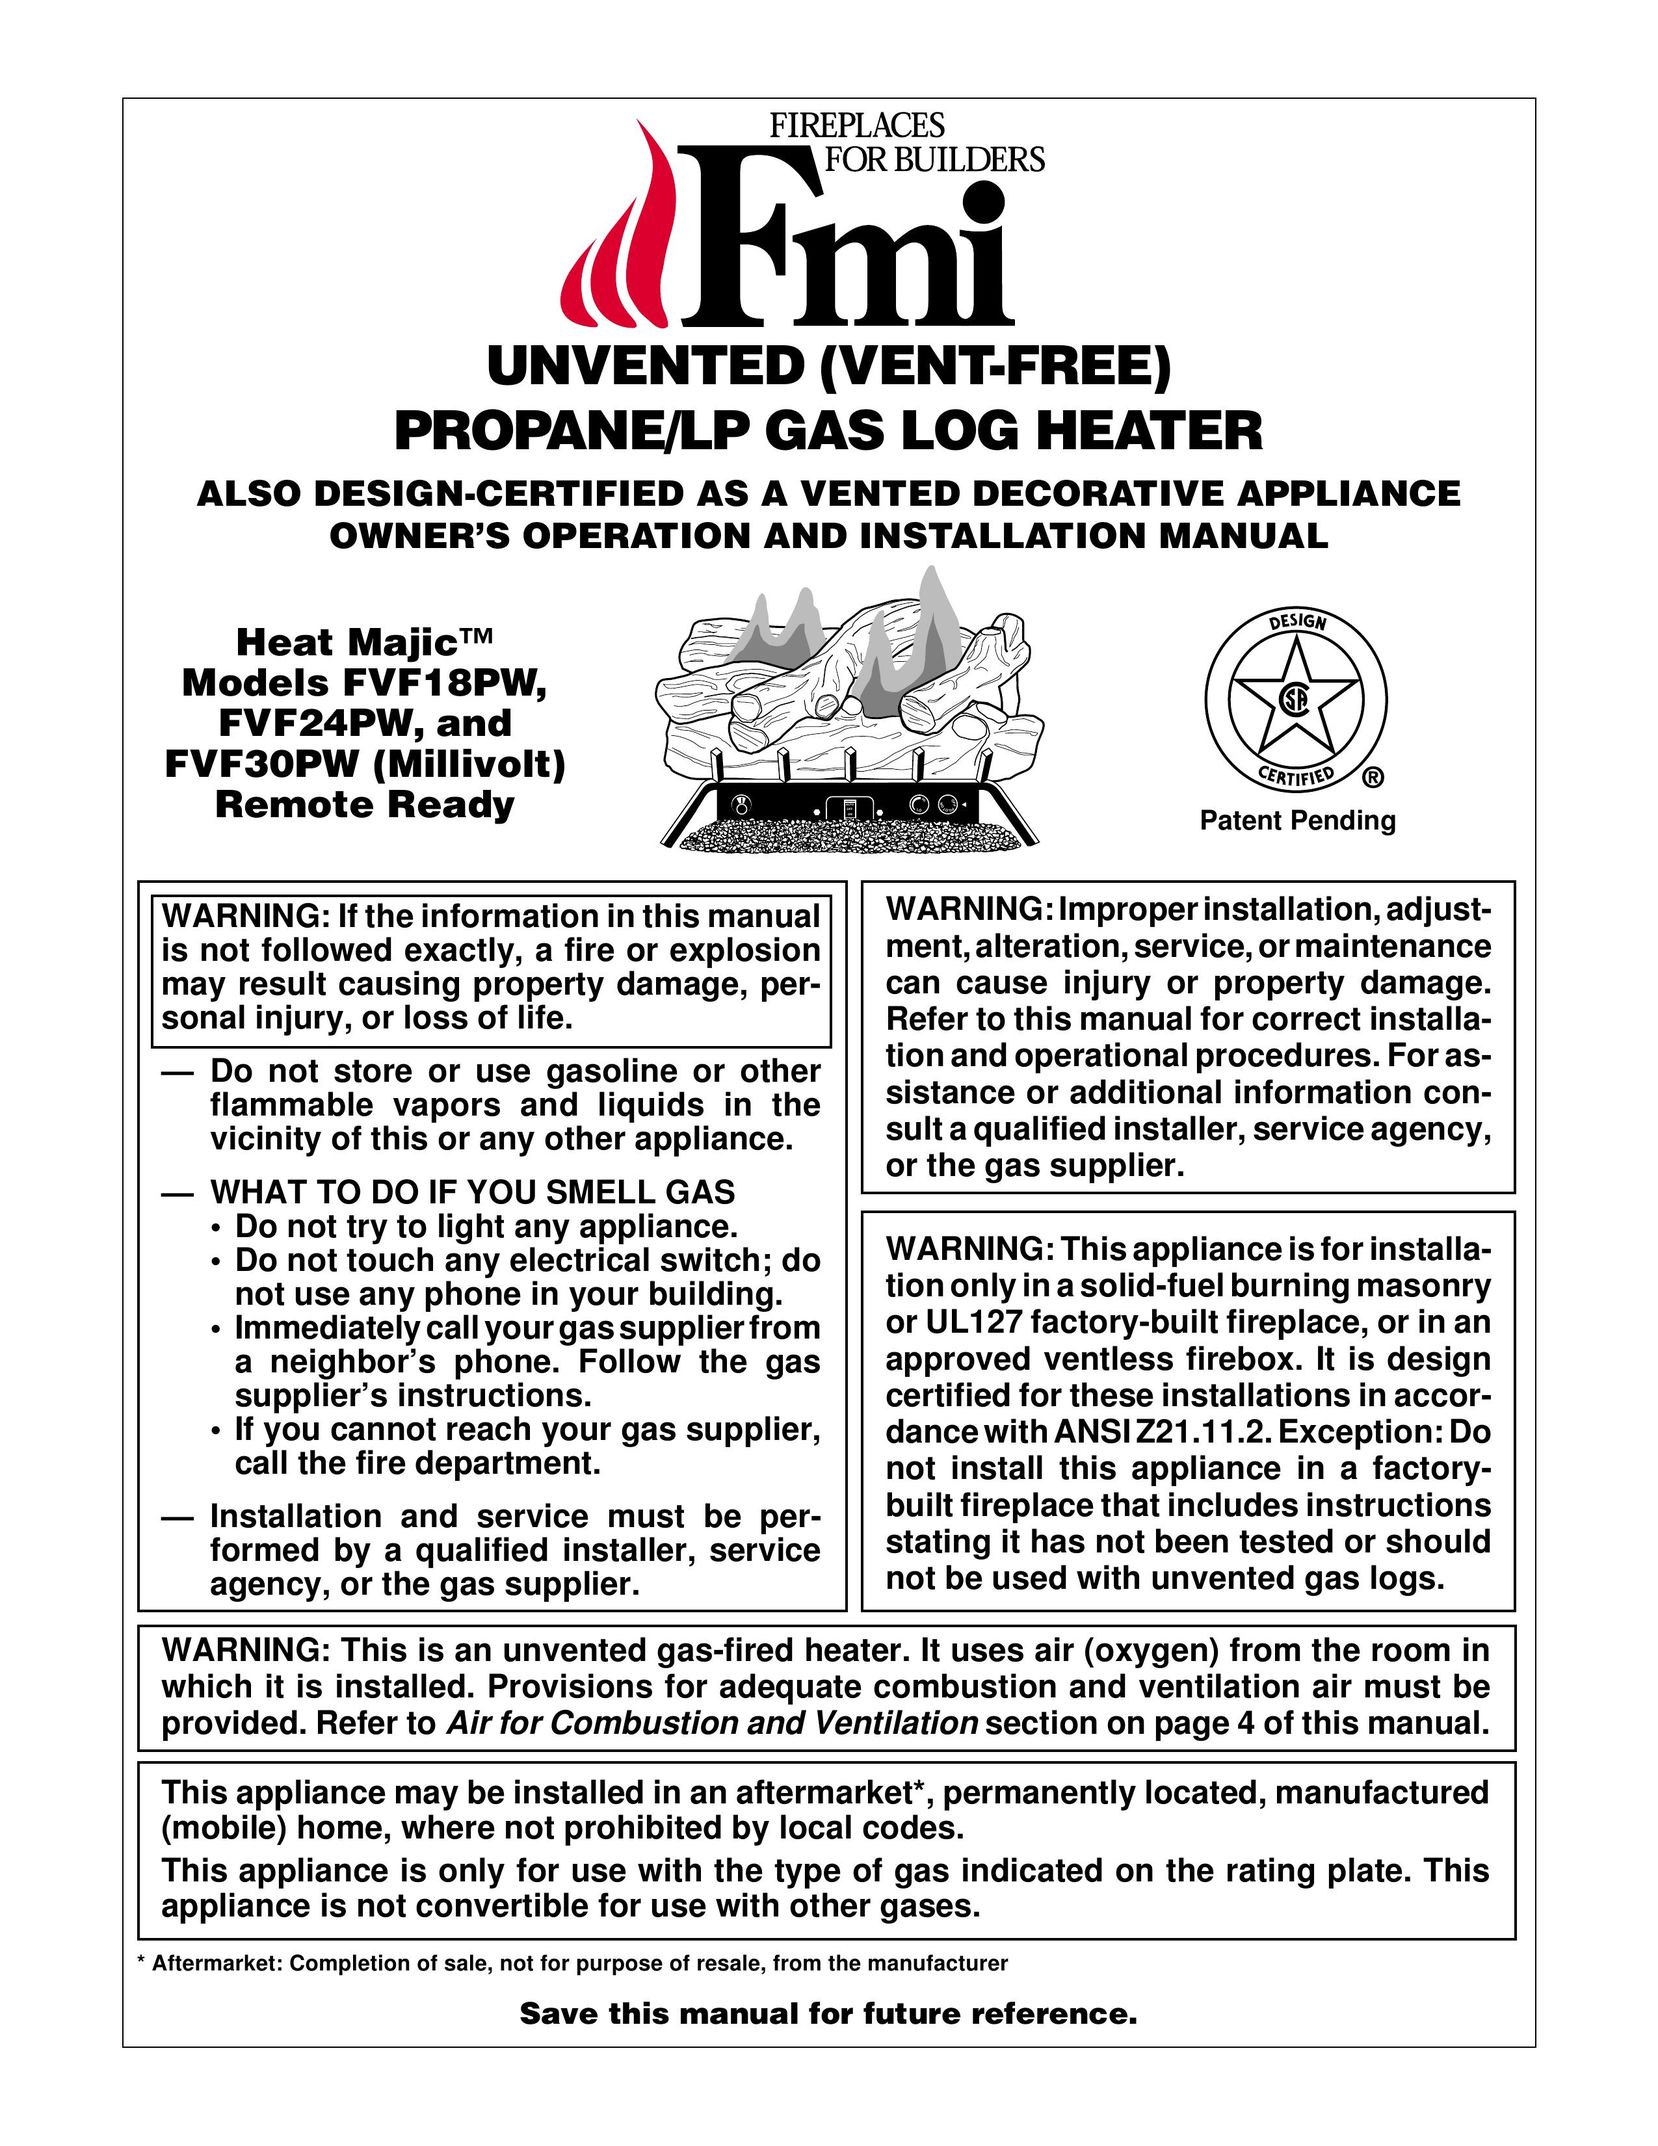 FMI FVF30PW Gas Heater User Manual